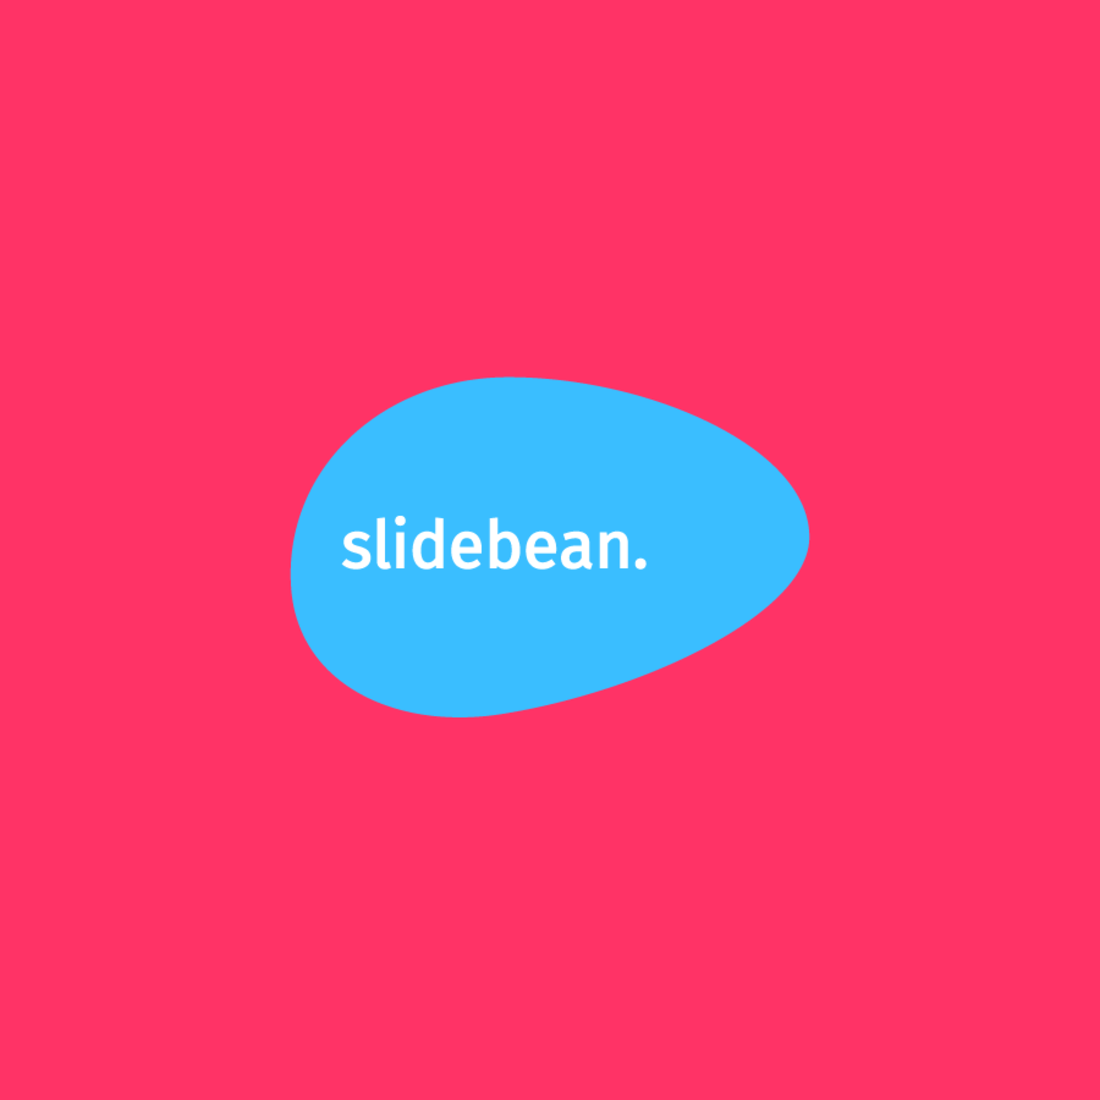 Image contains the slidebean logo